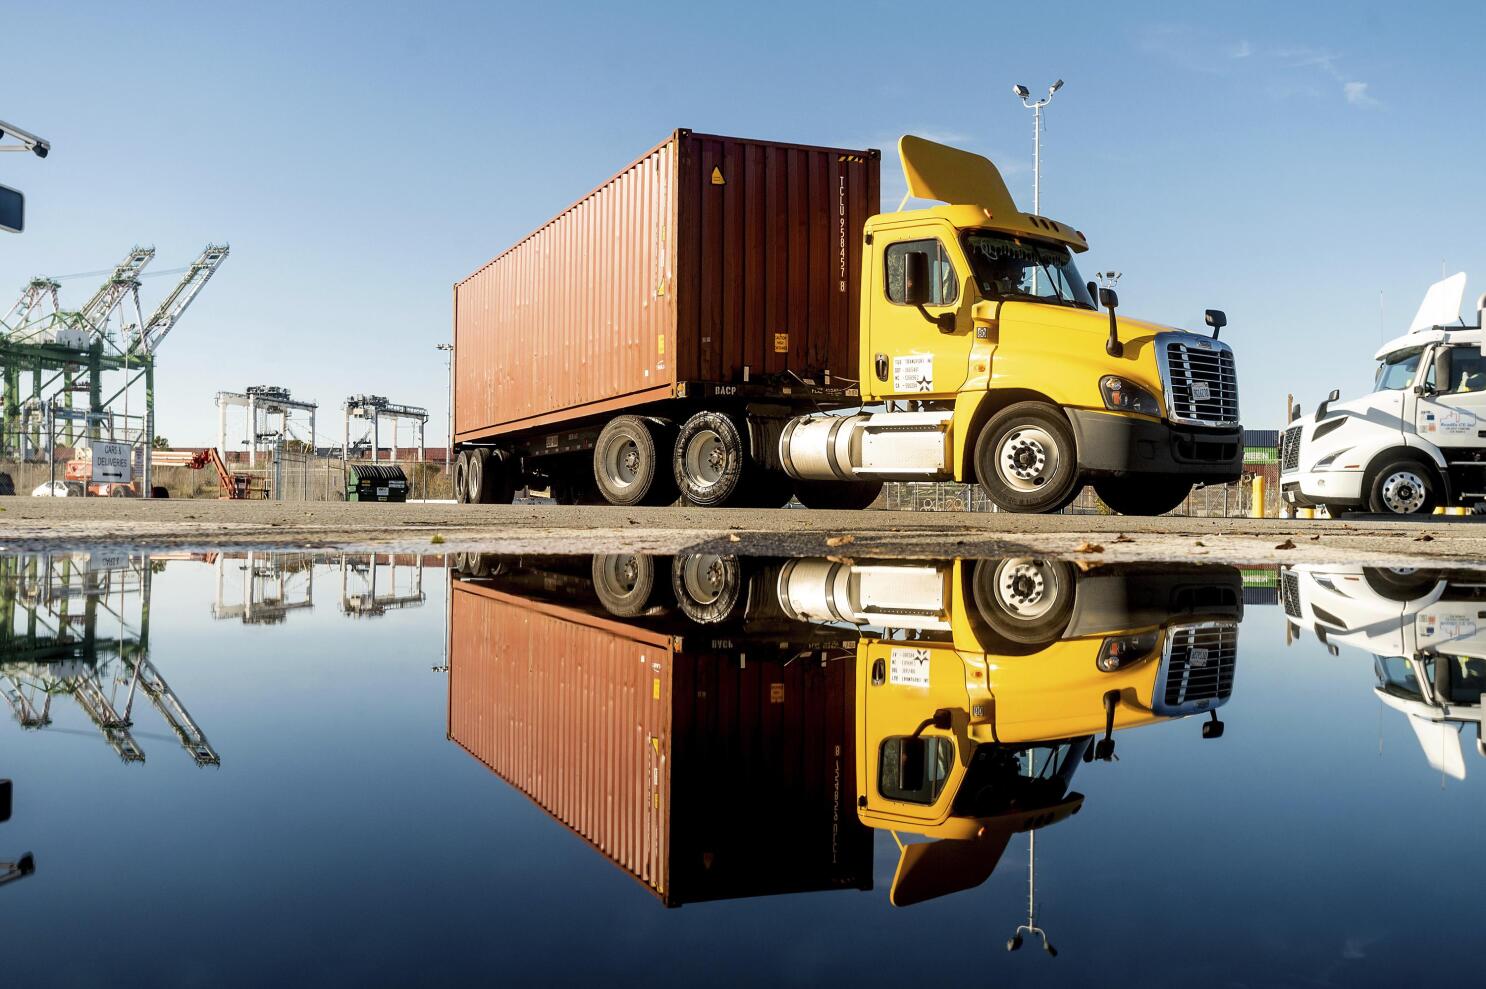 phasing diesel AP out approves rule News big | California trucks